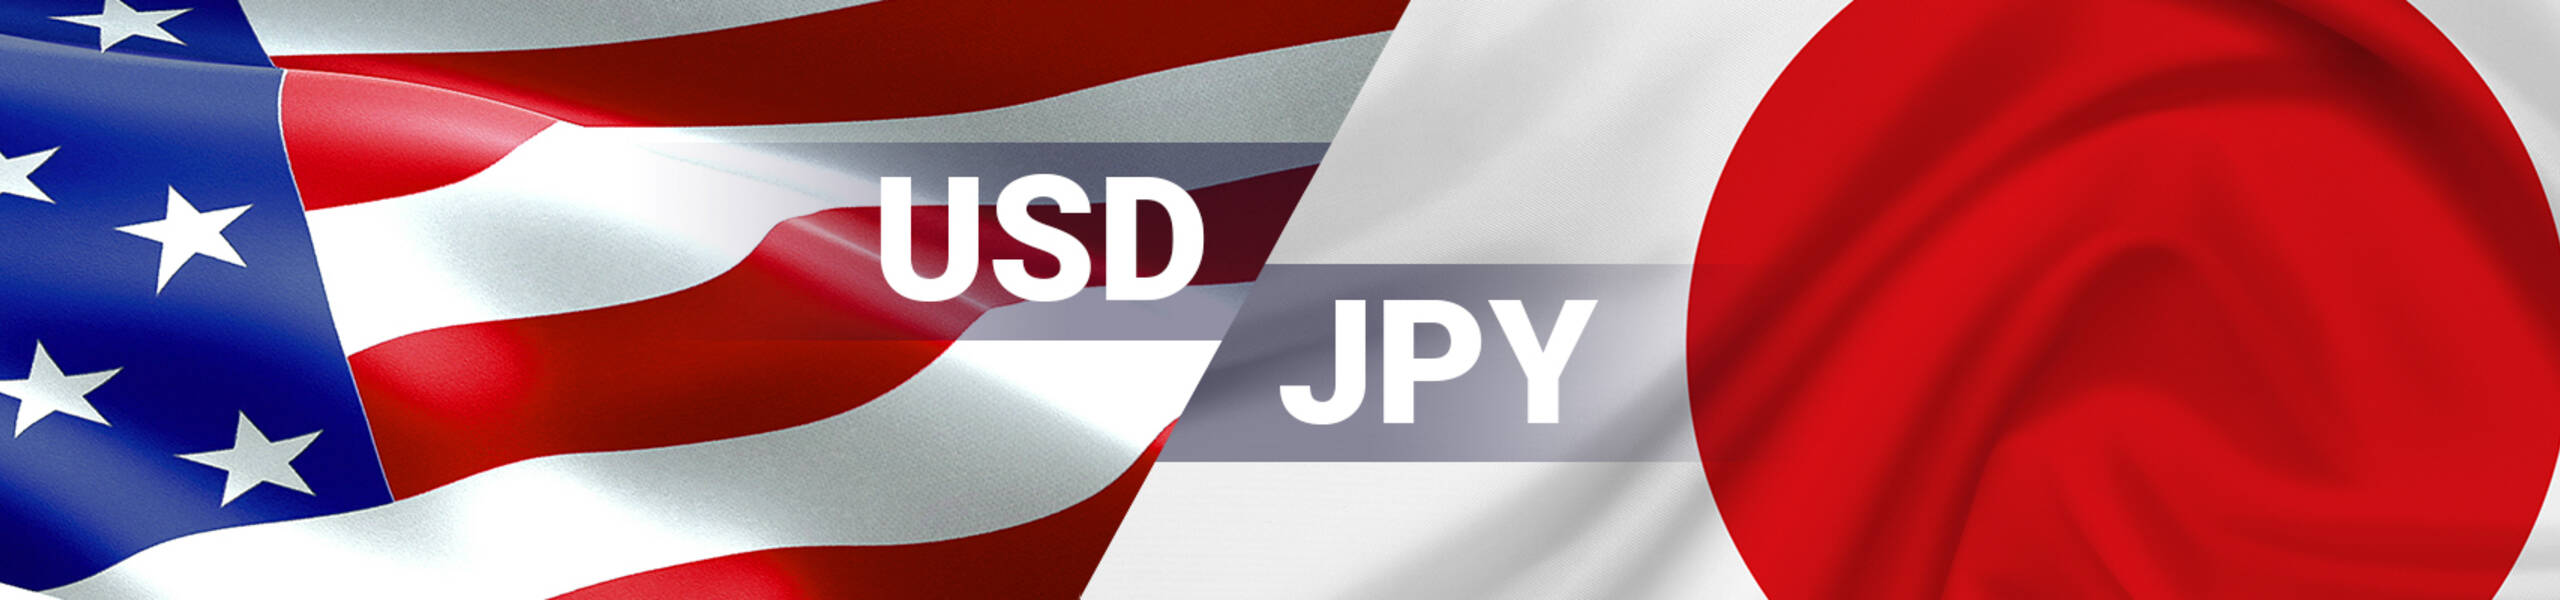 USD/JPY: Dollar breaking down SSB’s support